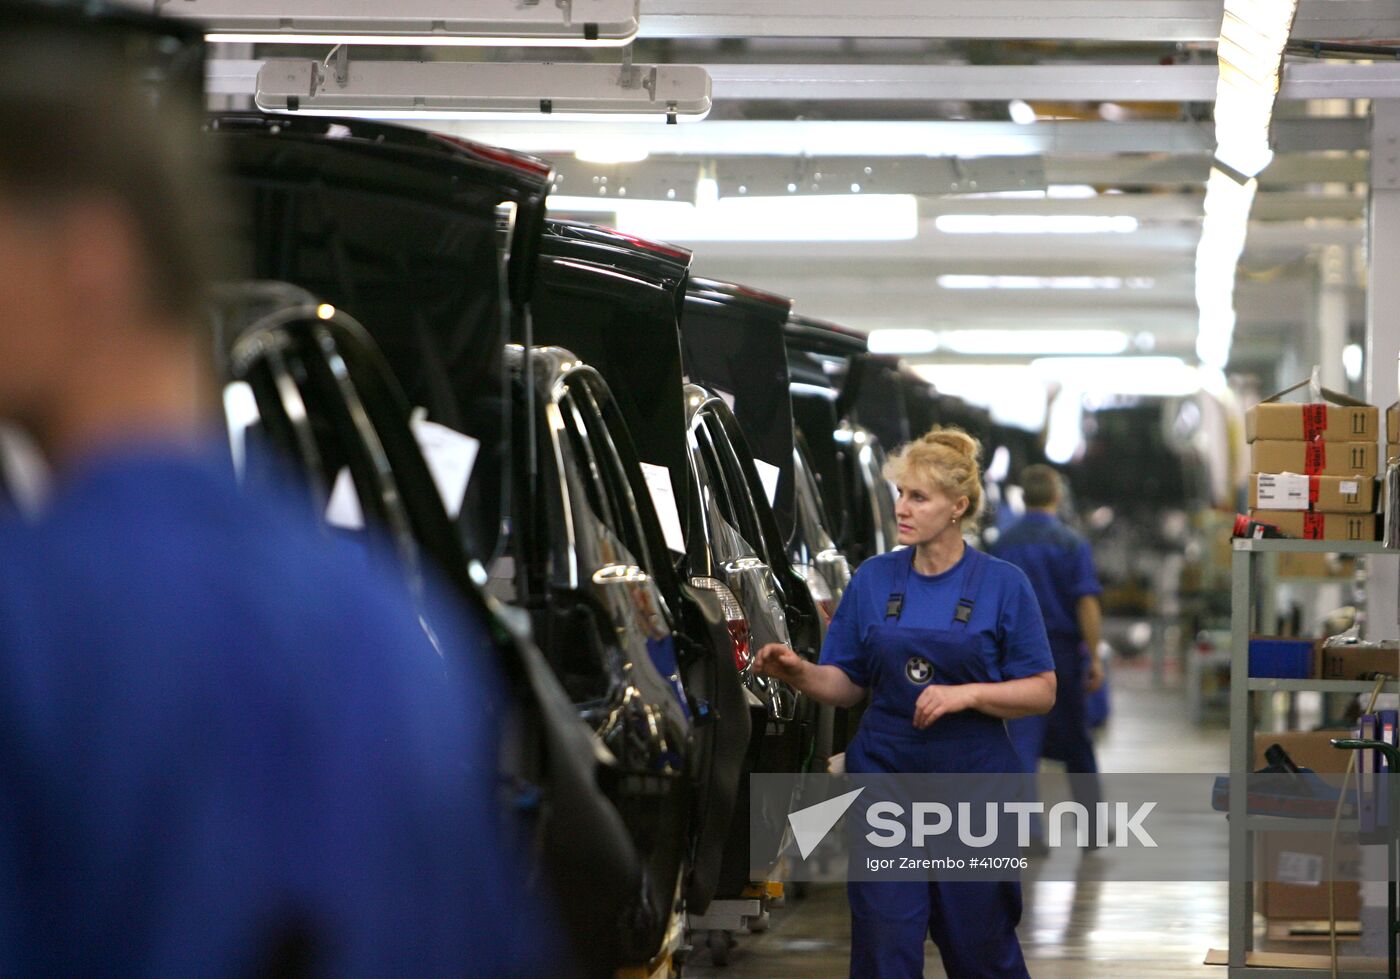 Avtotor Holding launches BMW SUVs production